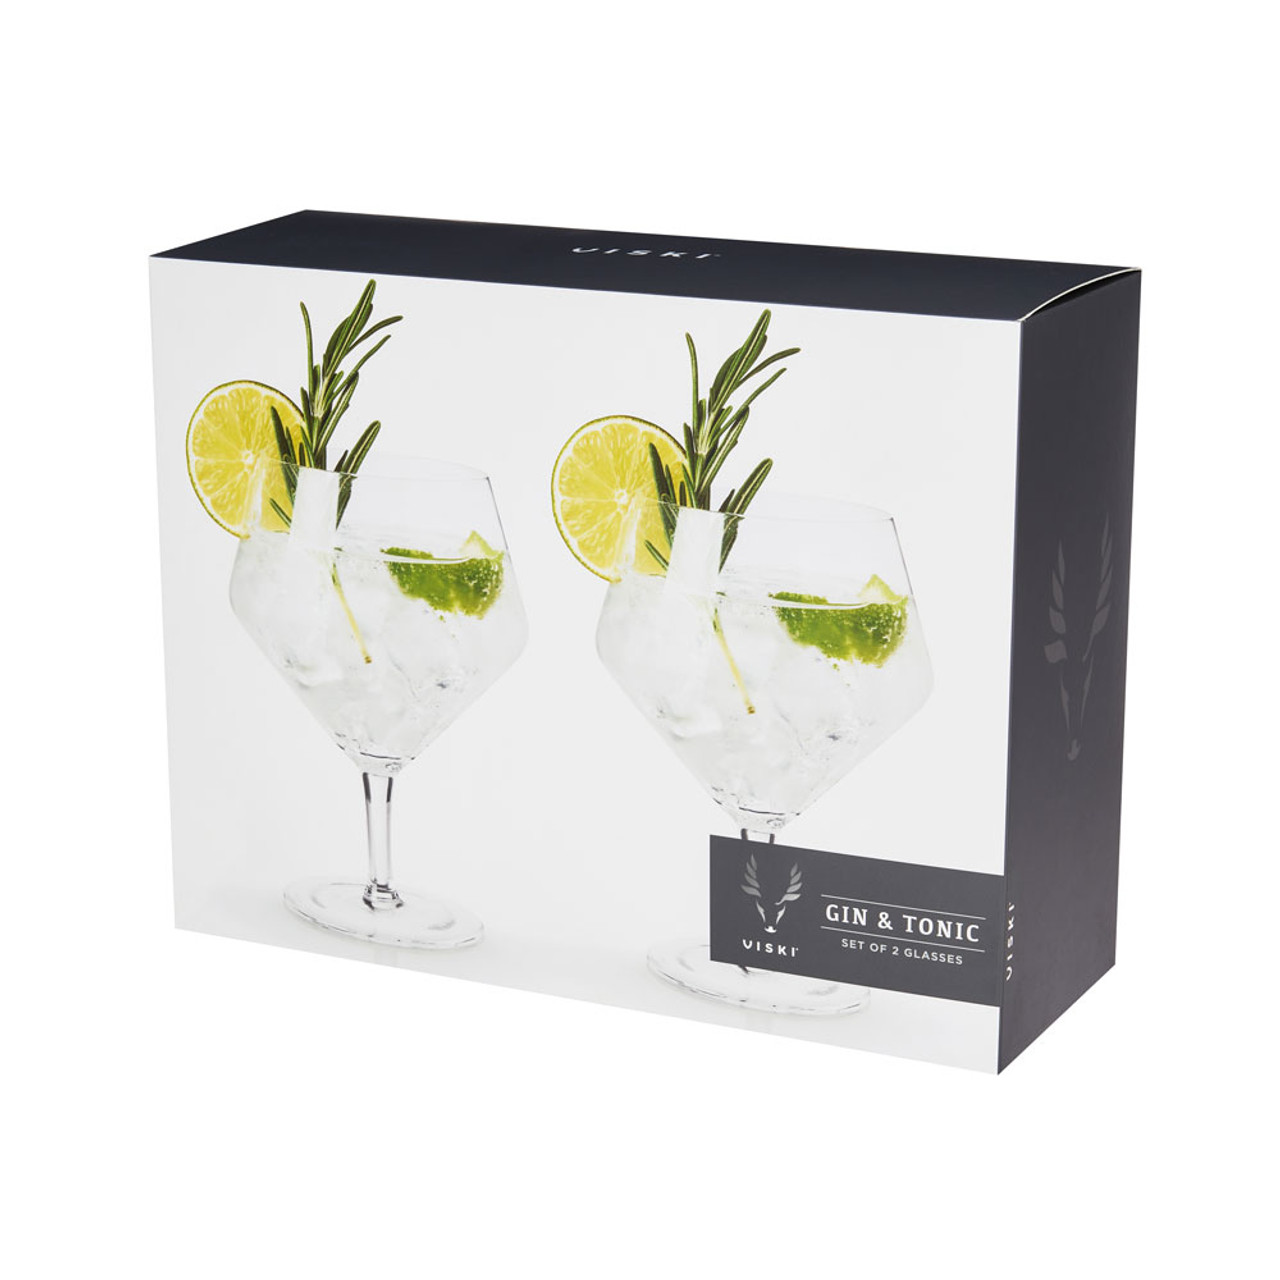 Viski Raye Gem Crystal Highball Tumblers Set of 2 - Premium Crystal  Drinking Glasses, Fancy Highball Cocktail Glassware Gift Set, 14 oz